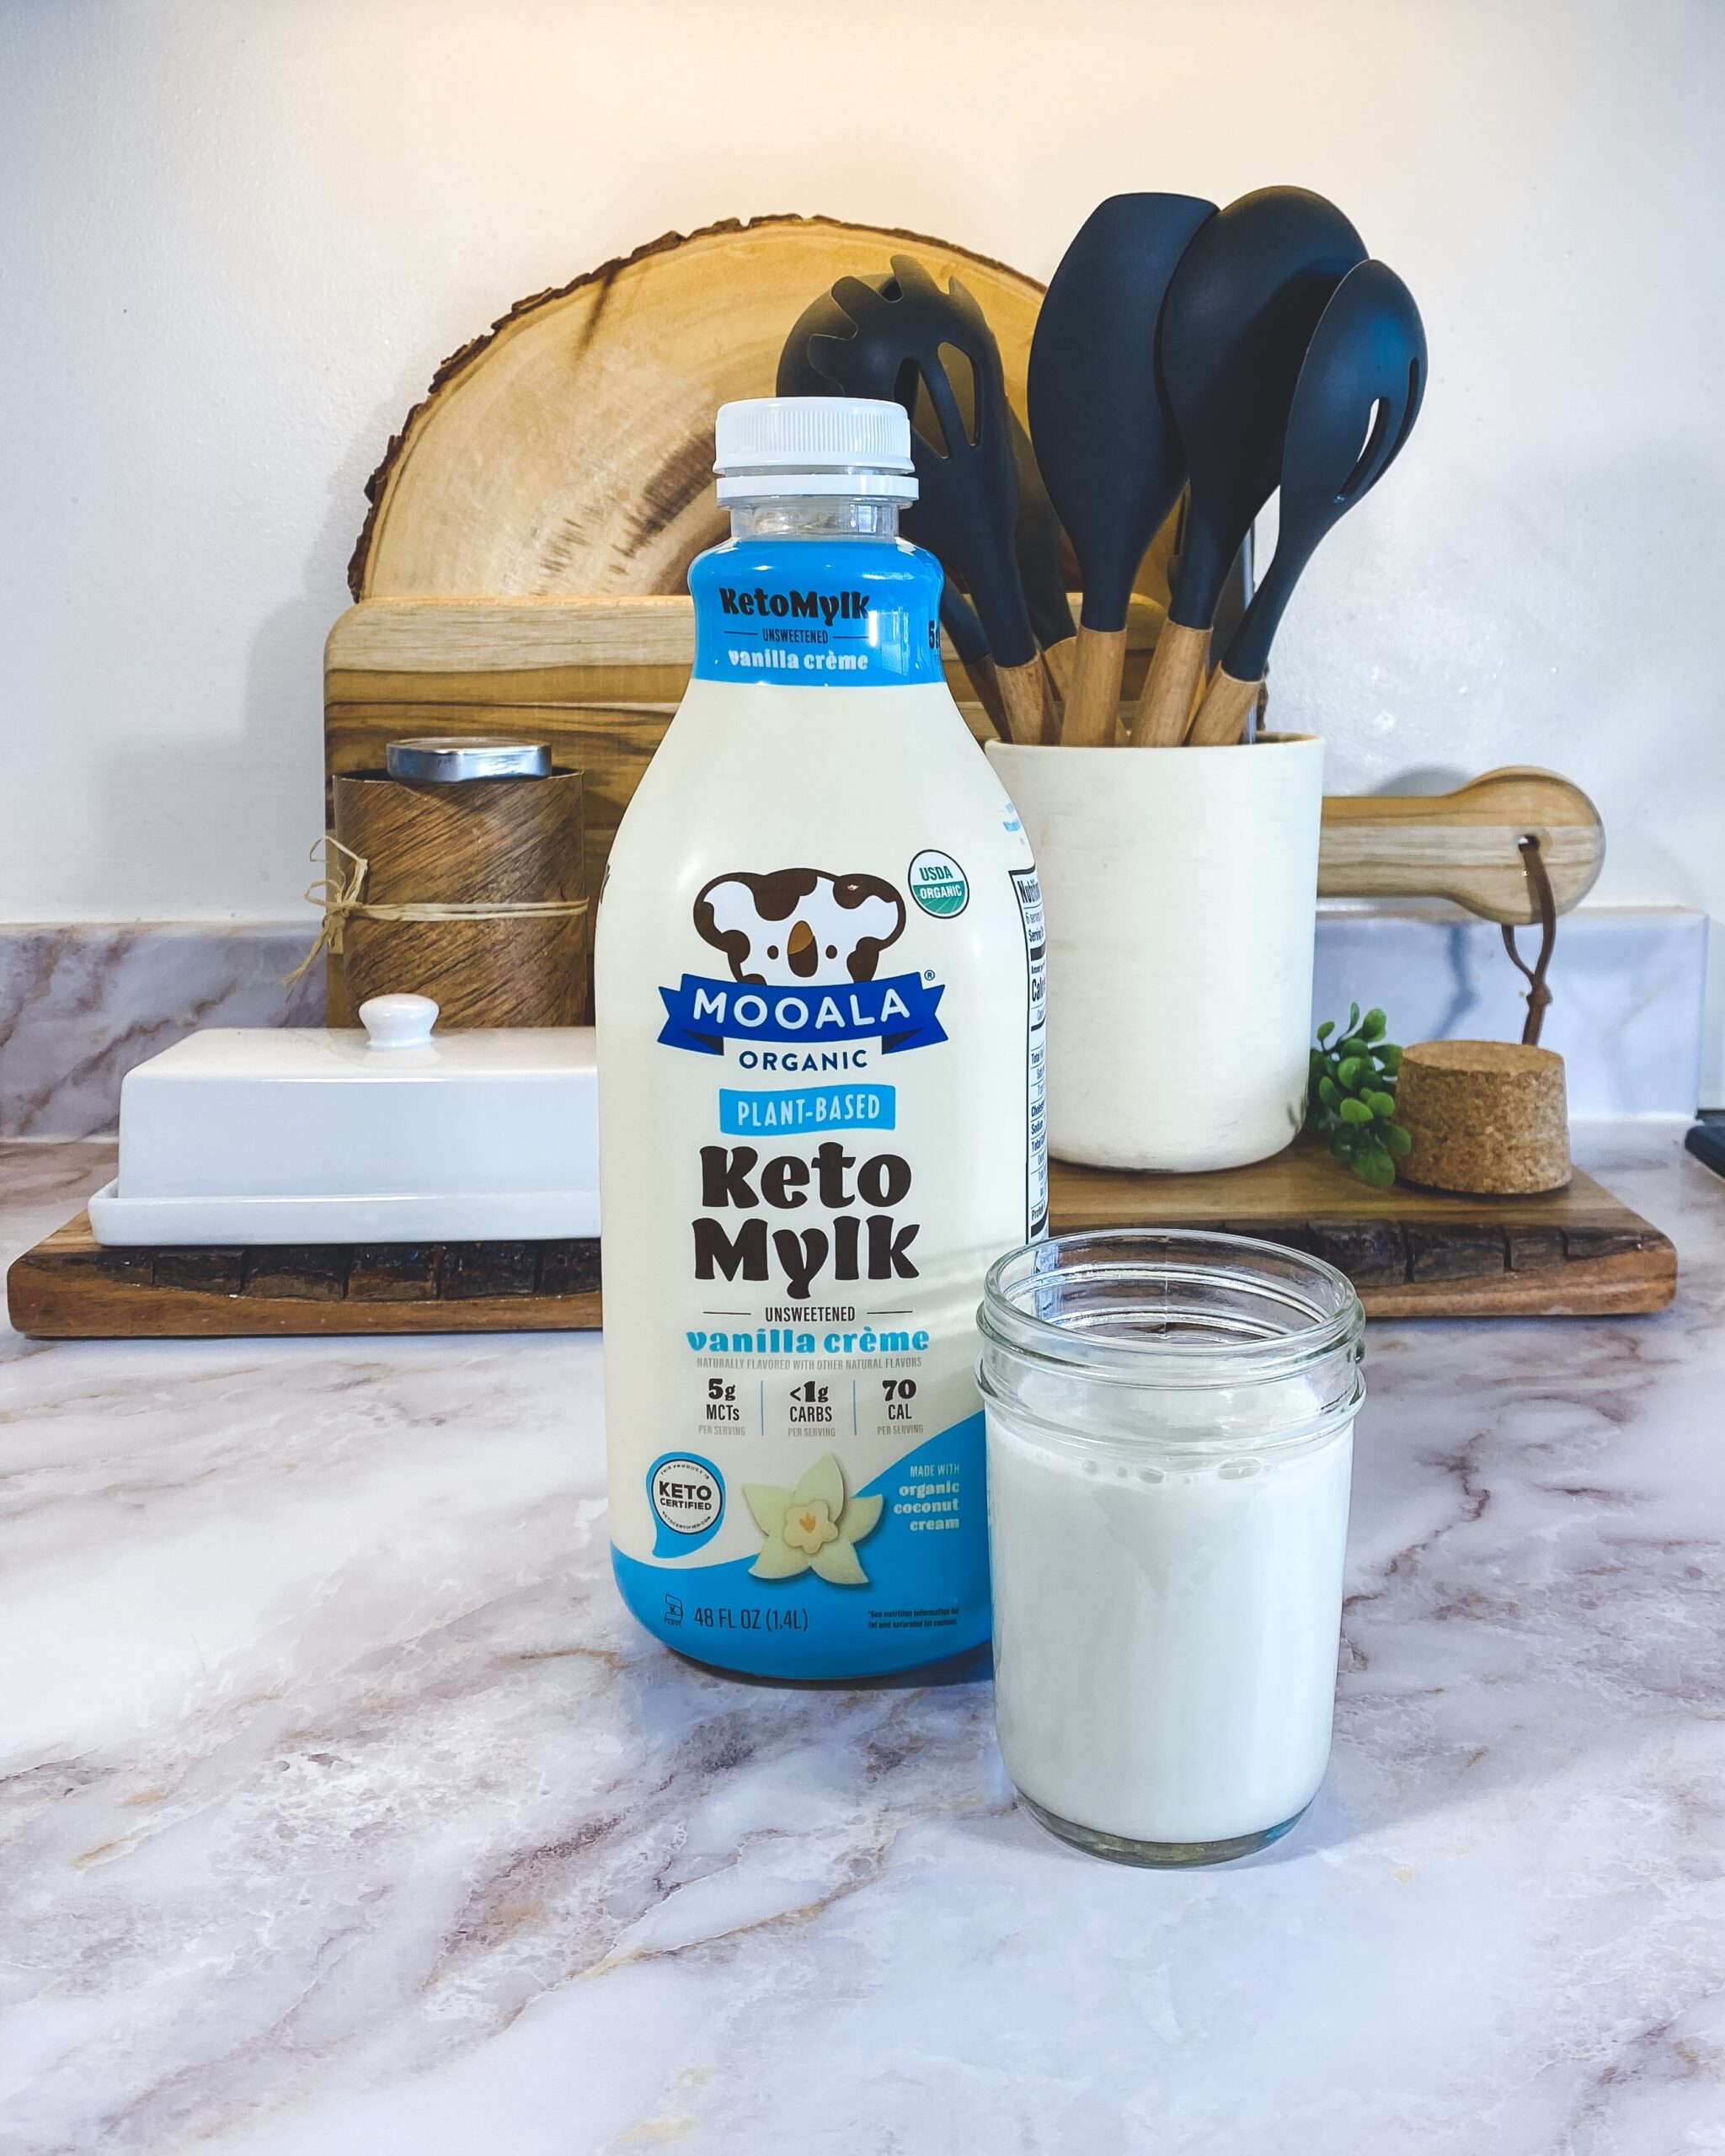 Mooala Keto Mylk Vanilla Creme Organic Unsweetened Plant Based Milk